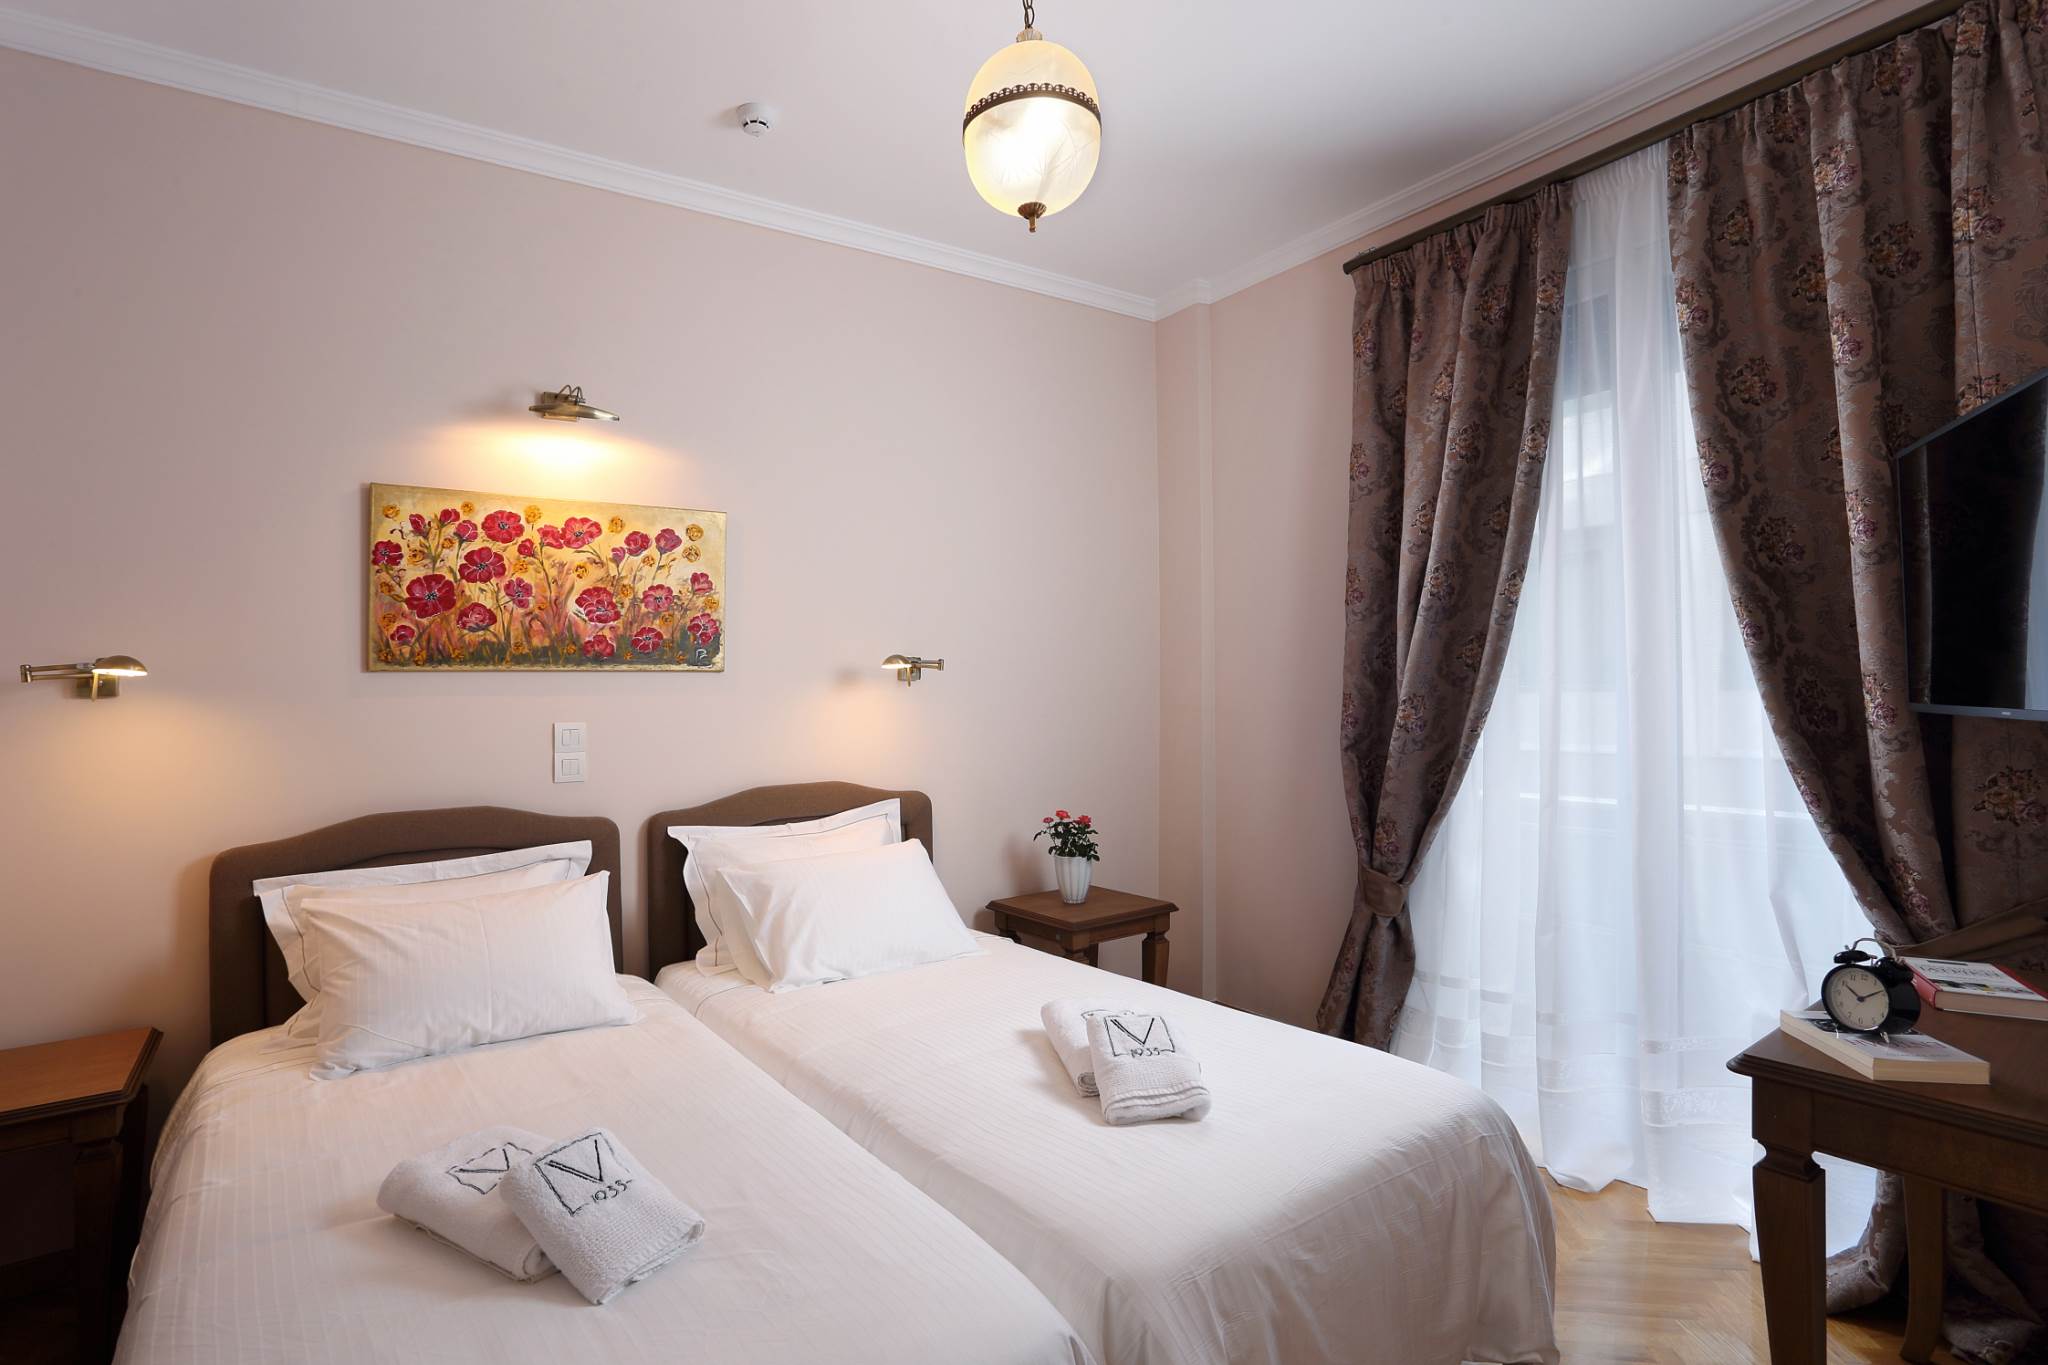 V1935 D1 Fully renovated one bedroom apt 1min to Syntagm...